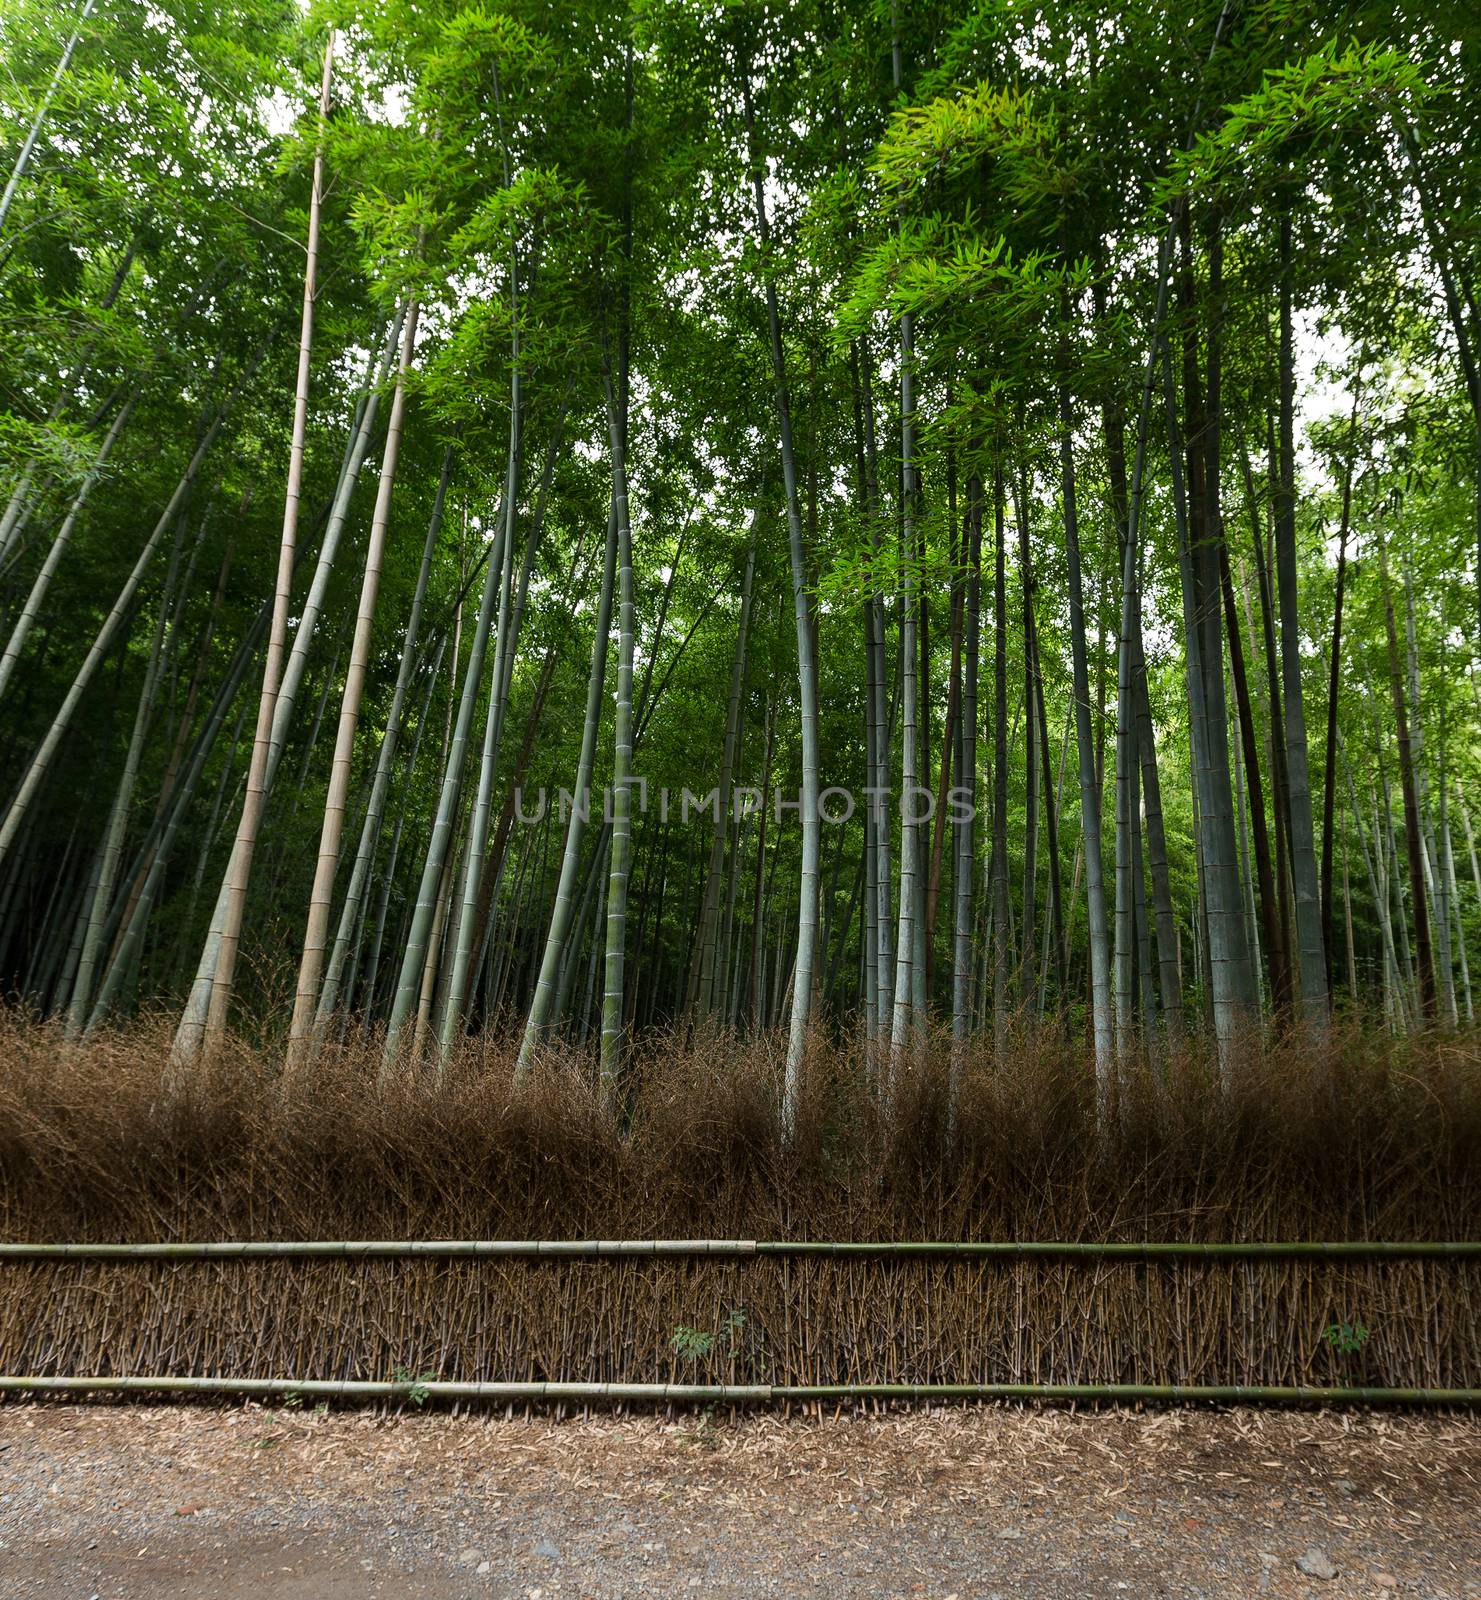 Bamboo trees and walkway